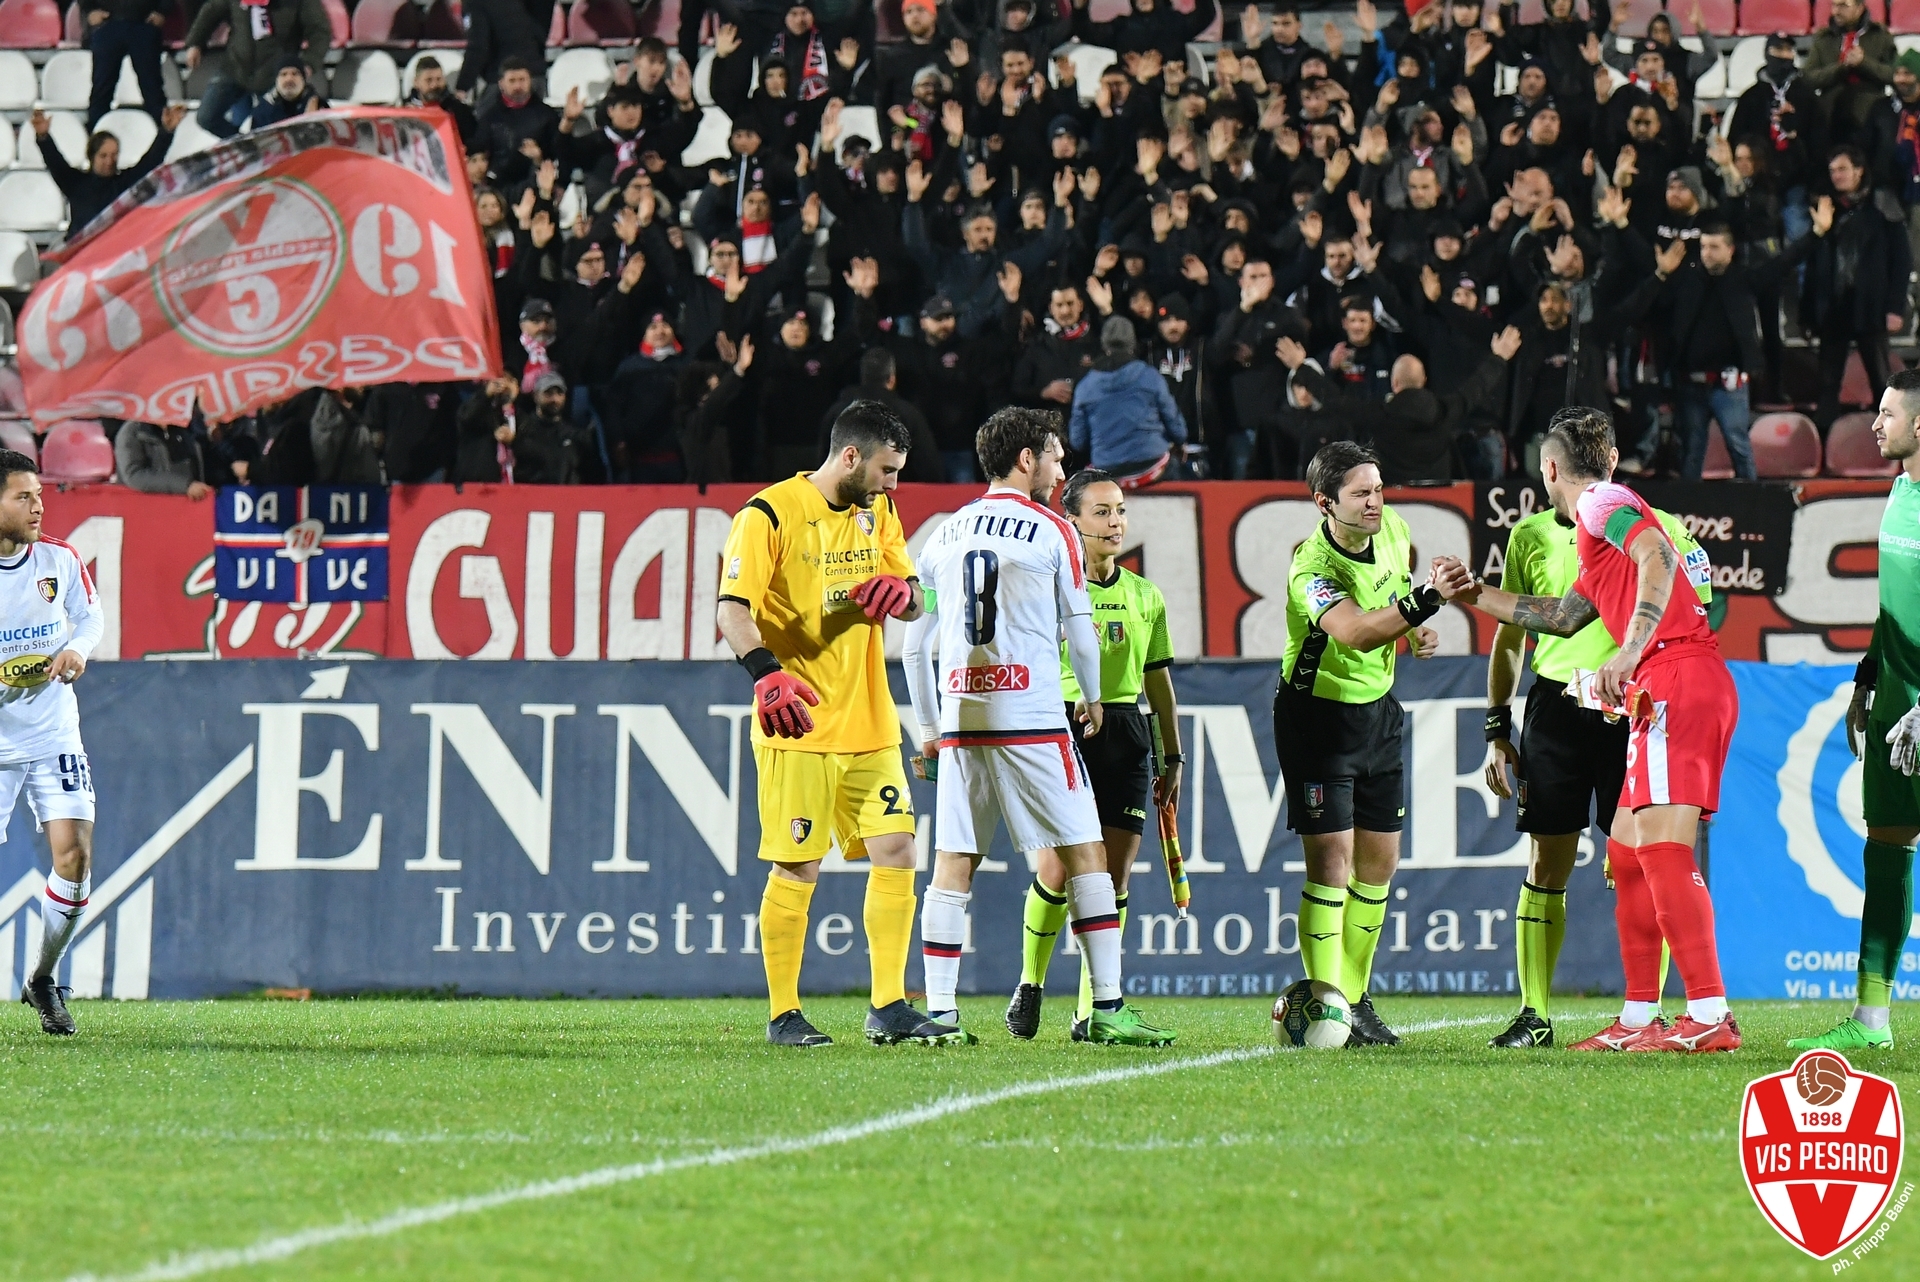 Calcio Serie C: Imolese penalizzata, Vis Pesaro salva senza i playout